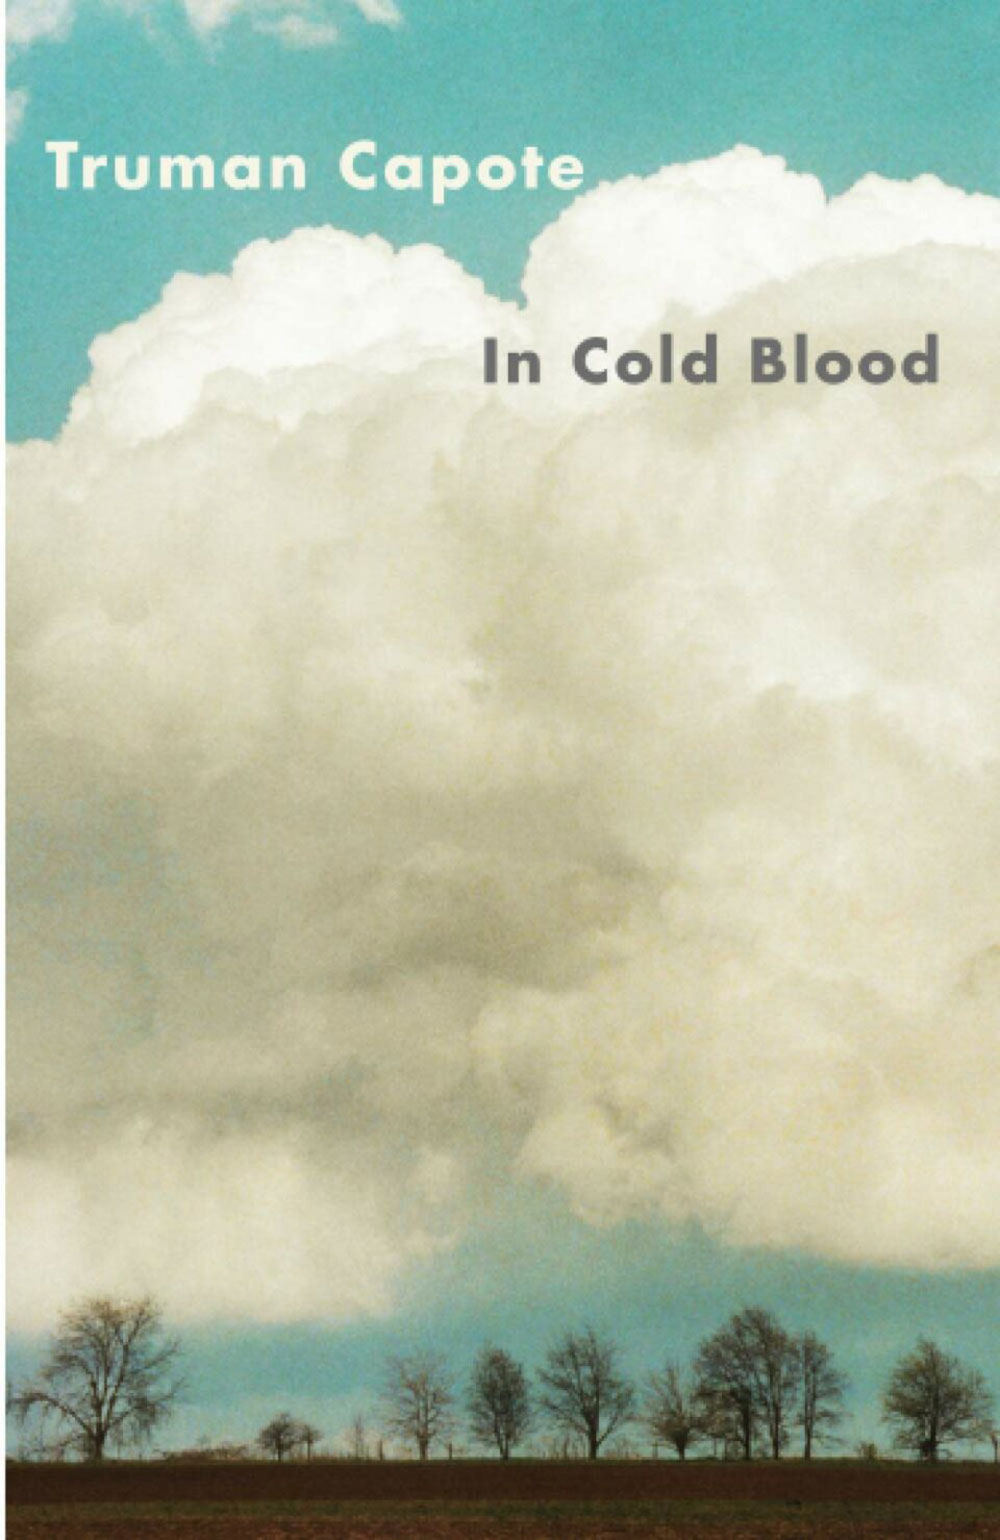 Best True Crime Books – In Cold Blood